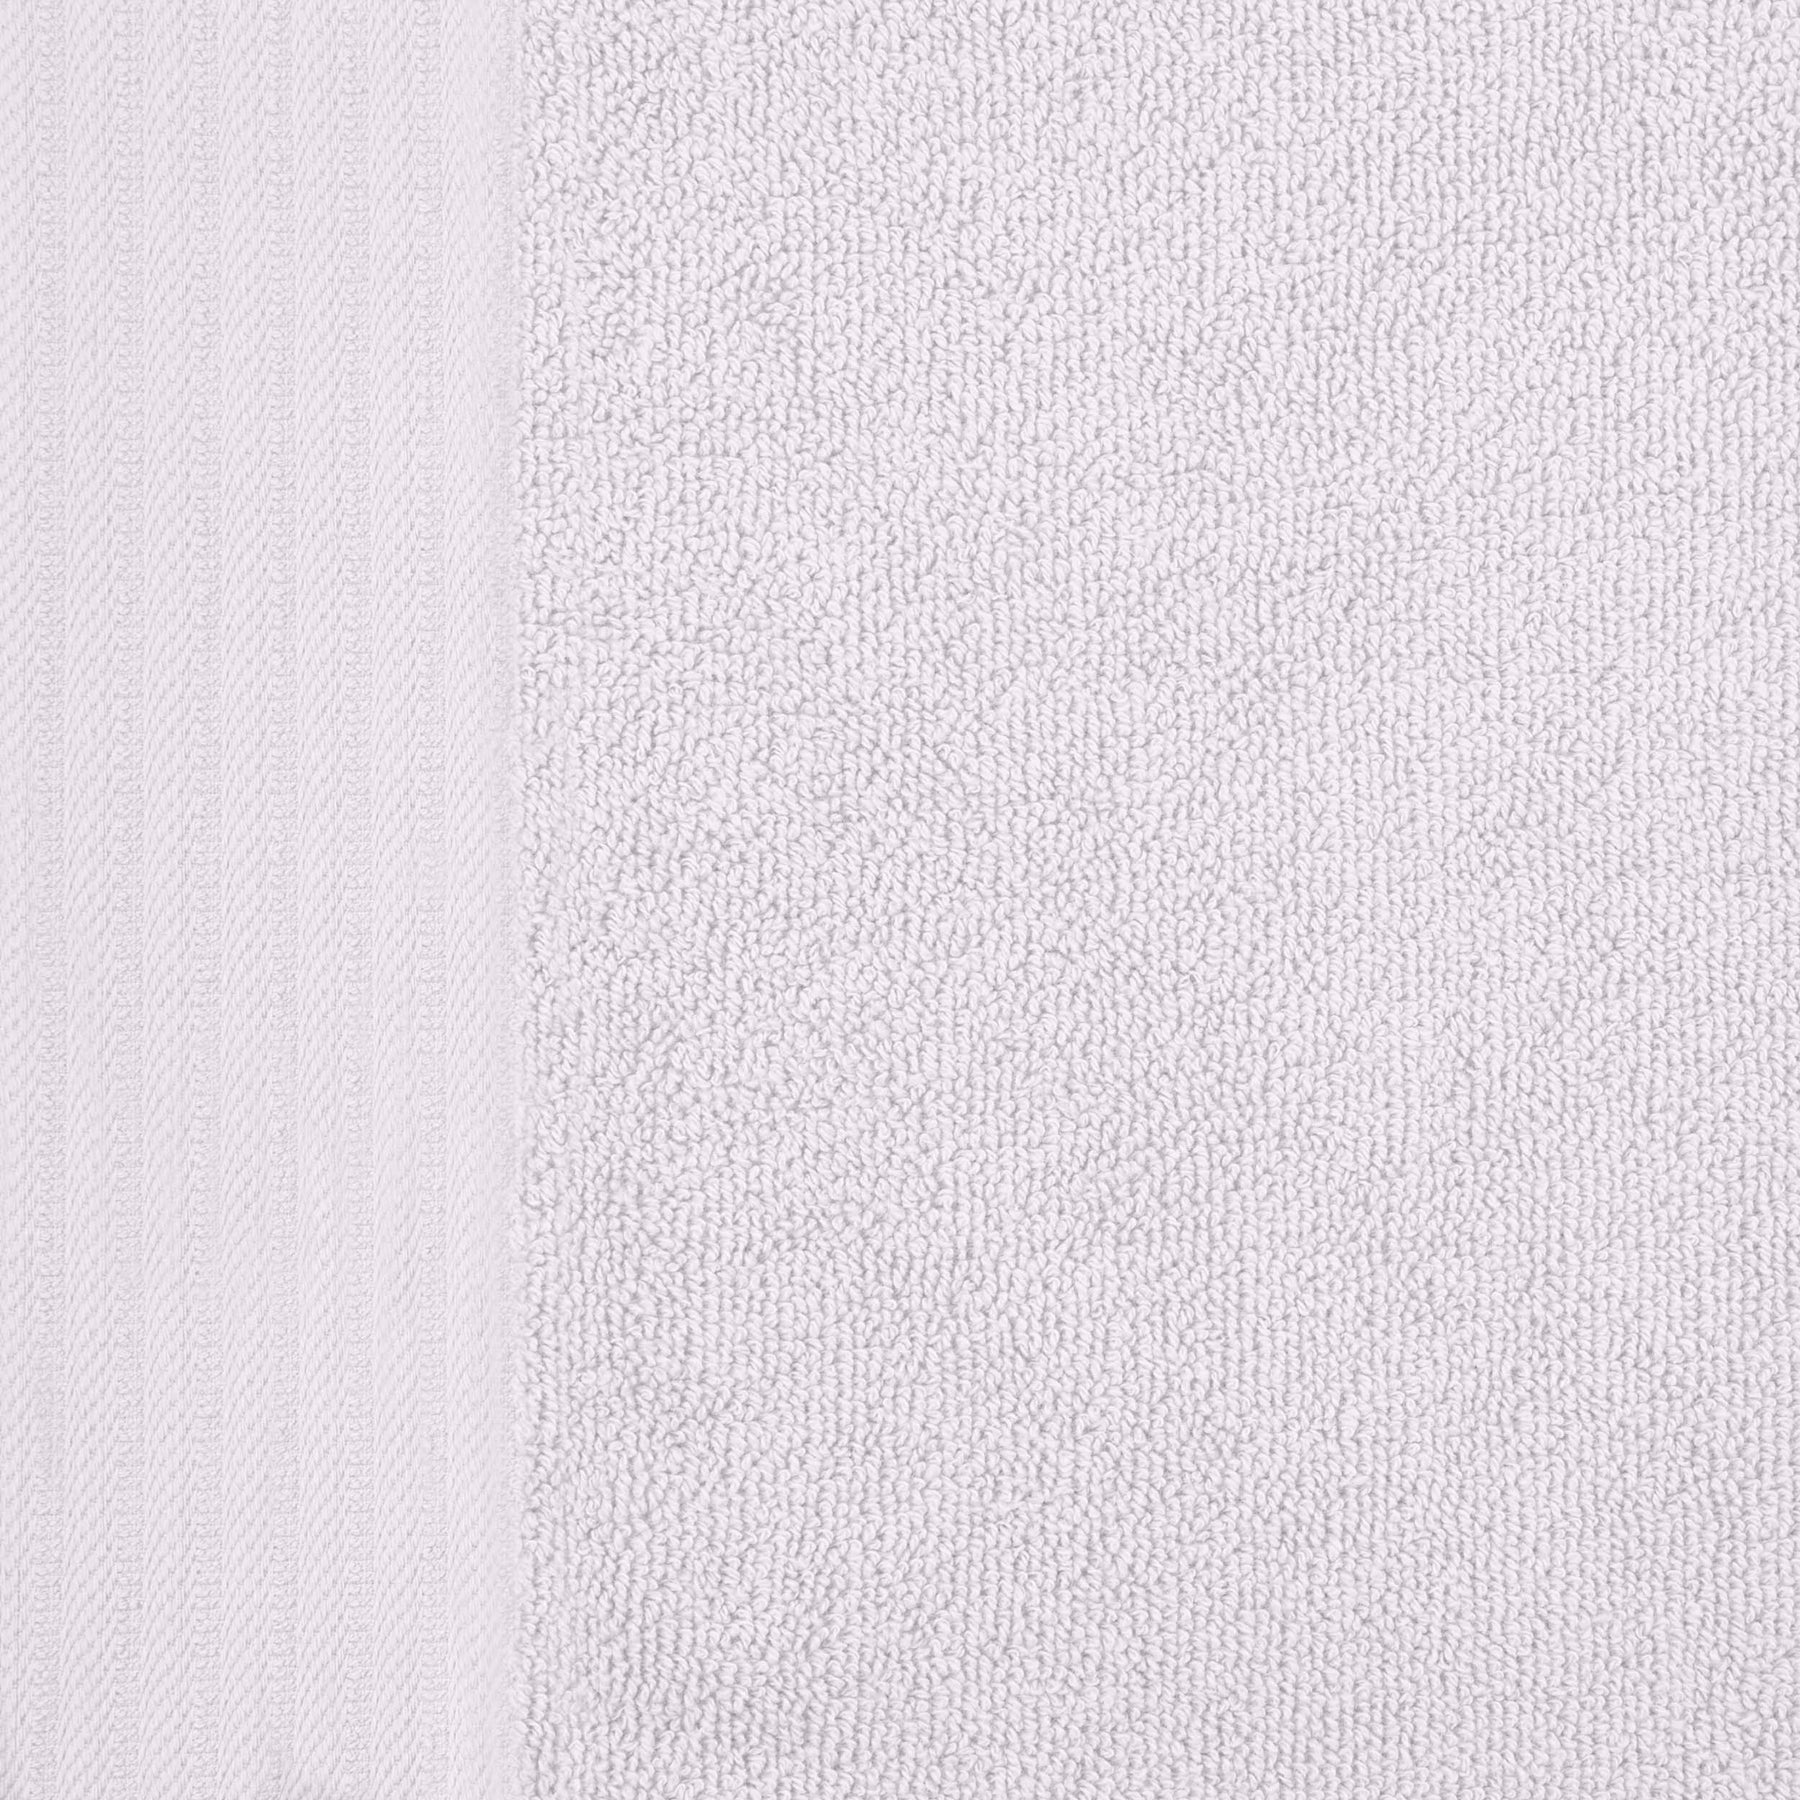 Premium Turkish Cotton Jacquard Herringbone and Solid 8-Piece Towel Set -  White